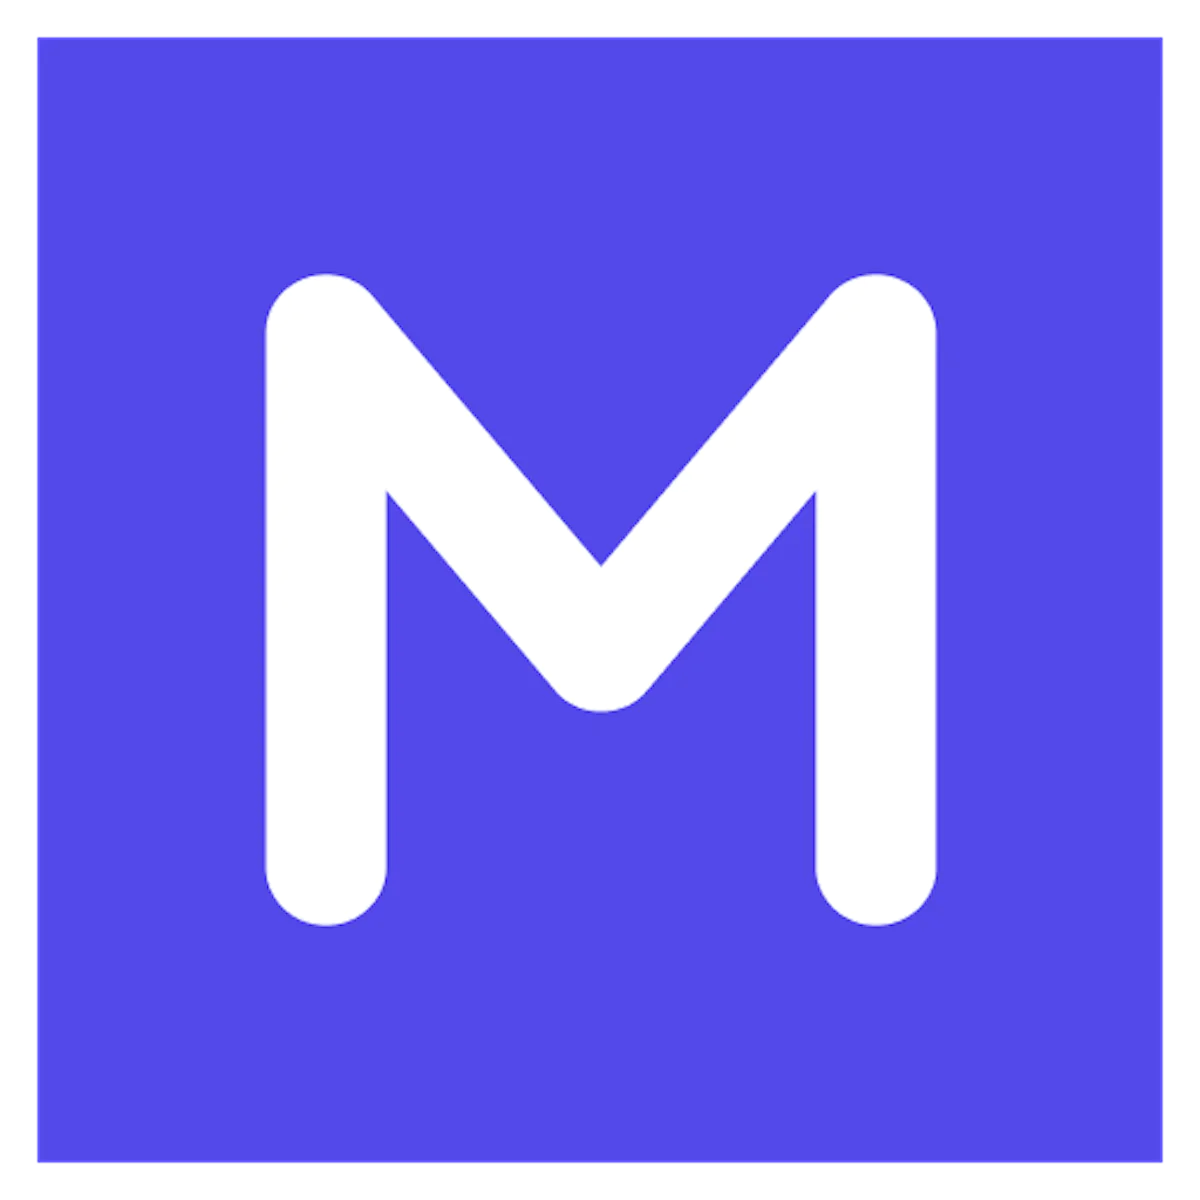 Meru ‑ Influencer Marketing